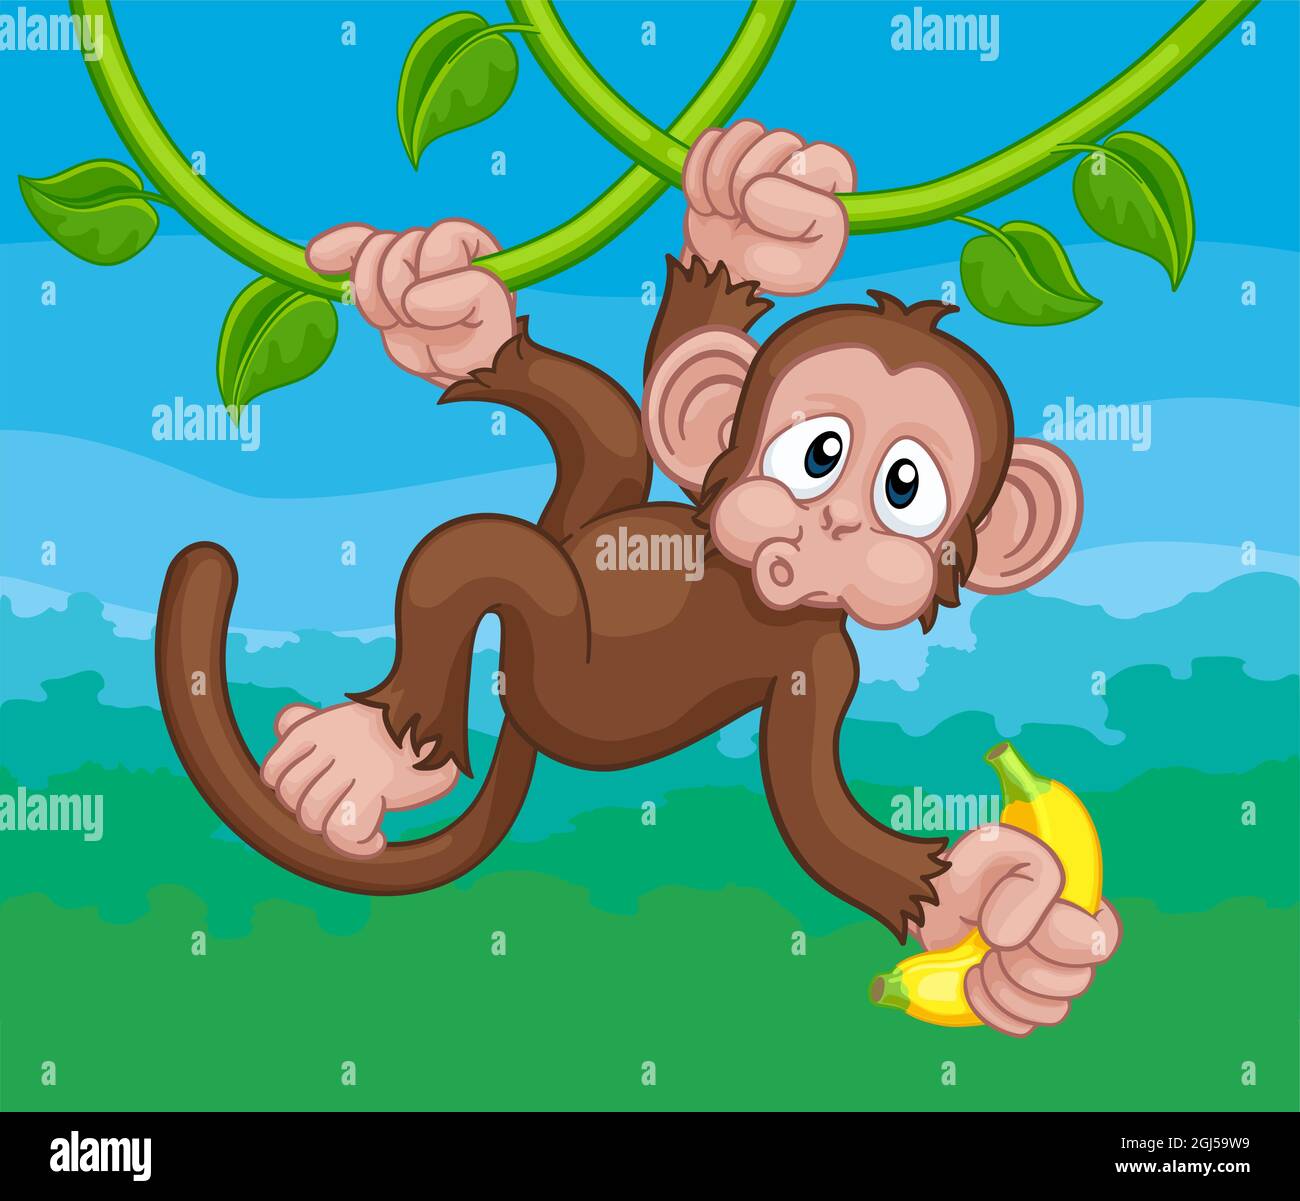 Monkey Singing On Jungle Vines With Banana Cartoon Stock Vector Image & Art  - Alamy